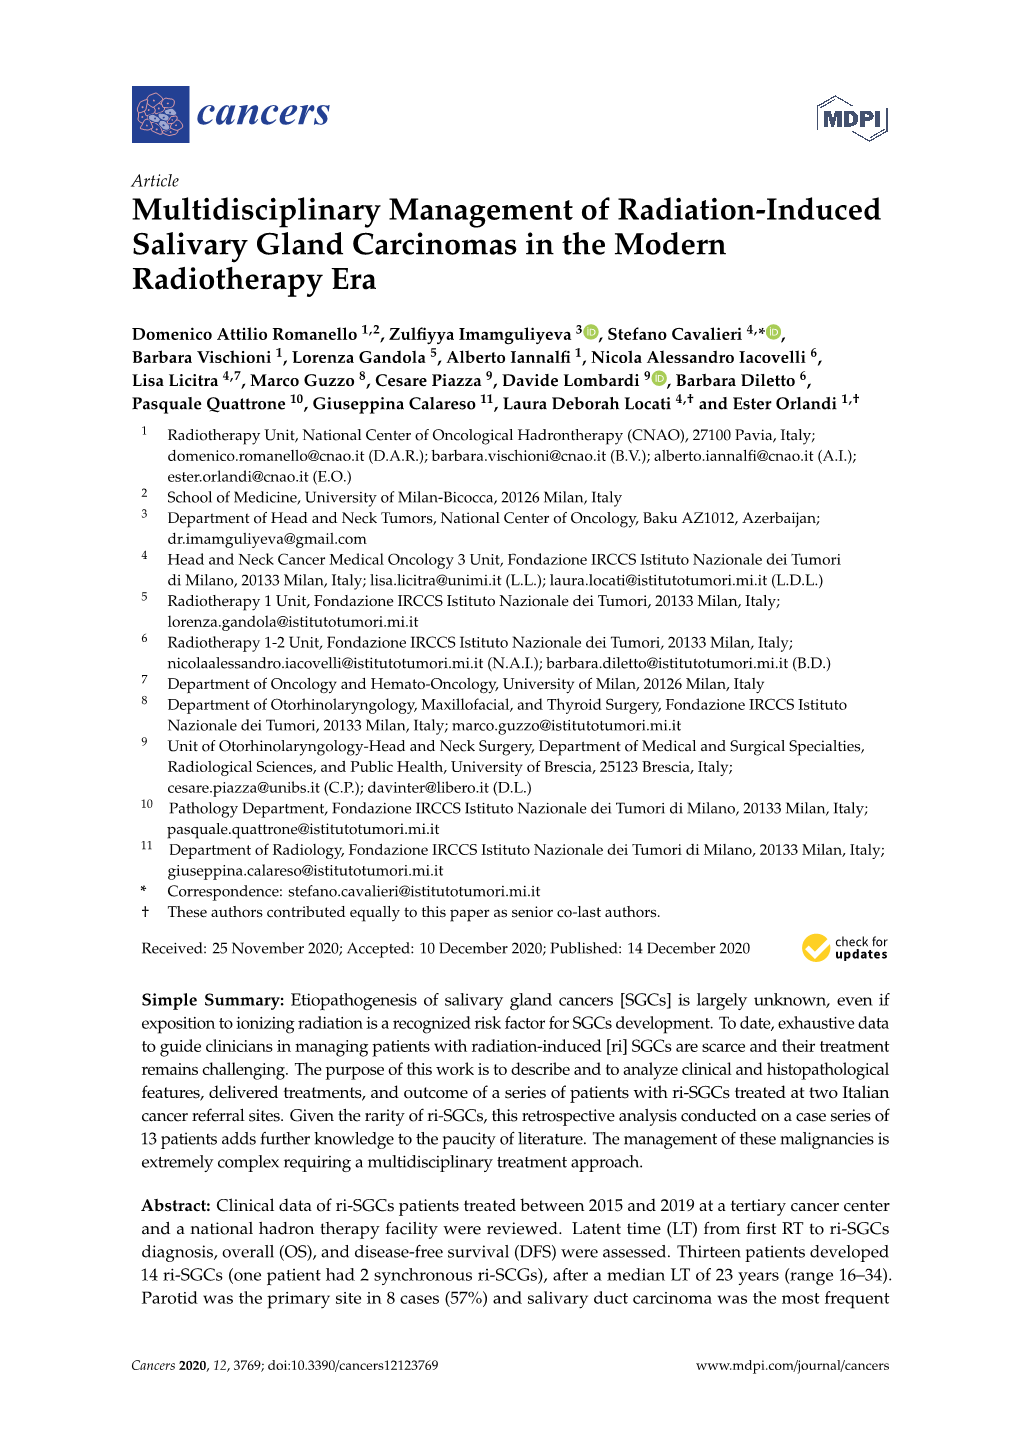 Multidisciplinary Management of Radiation-Induced Salivary Gland Carcinomas in the Modern Radiotherapy Era